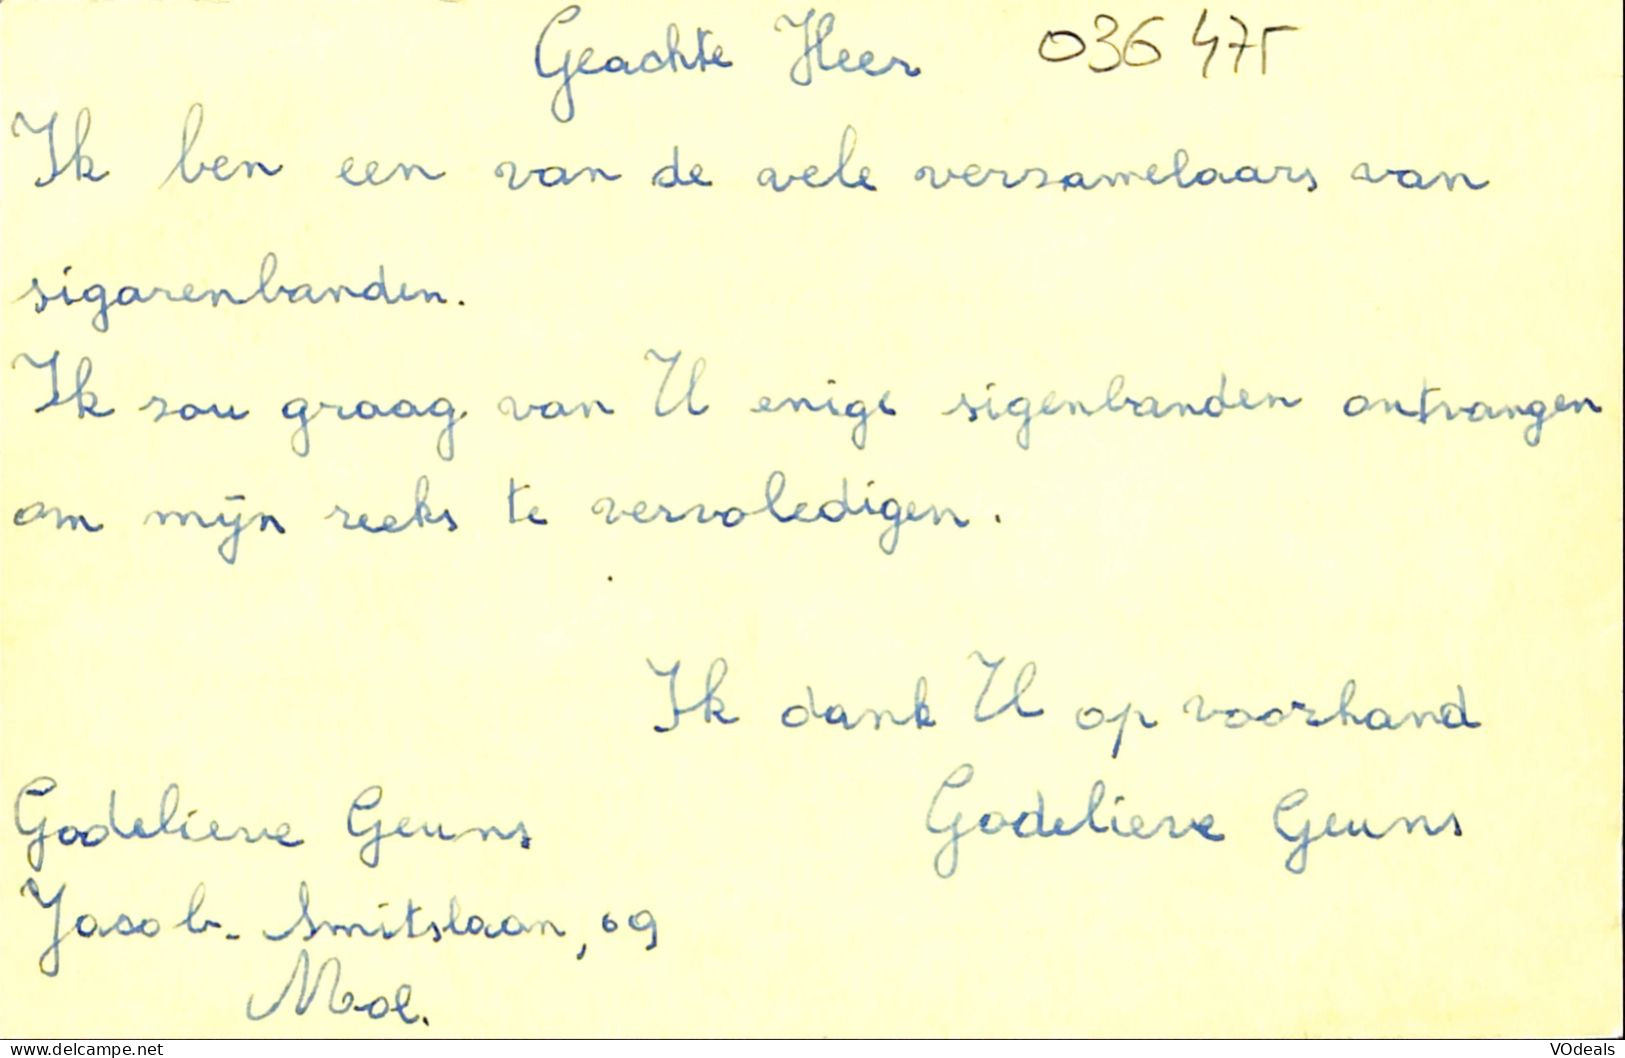 Belgique - Carte Postale - Entier Postal - 196? - Mol - Braan (Holland) - 2 Francs - Cartoline 1951-..